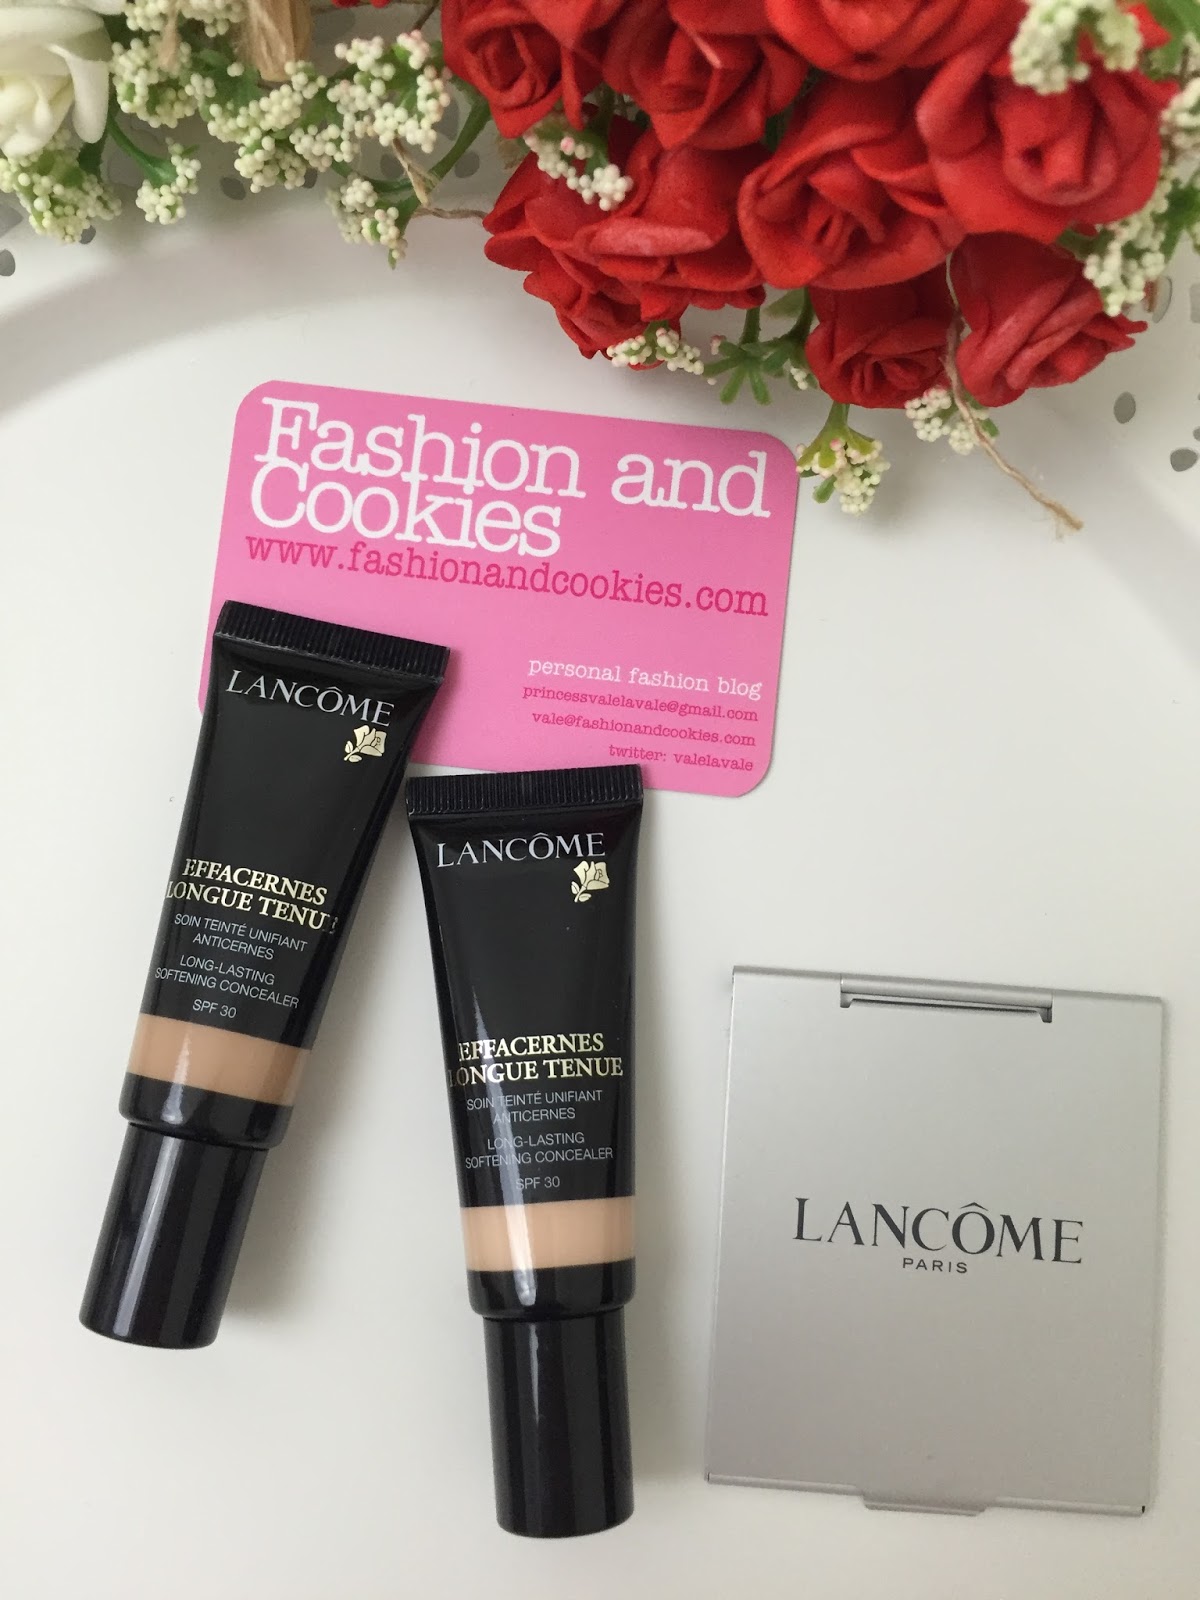 Lancôme Effacernes Longue Tenue concealer review on Fashion and Cookies beauty blog, beauty blogger